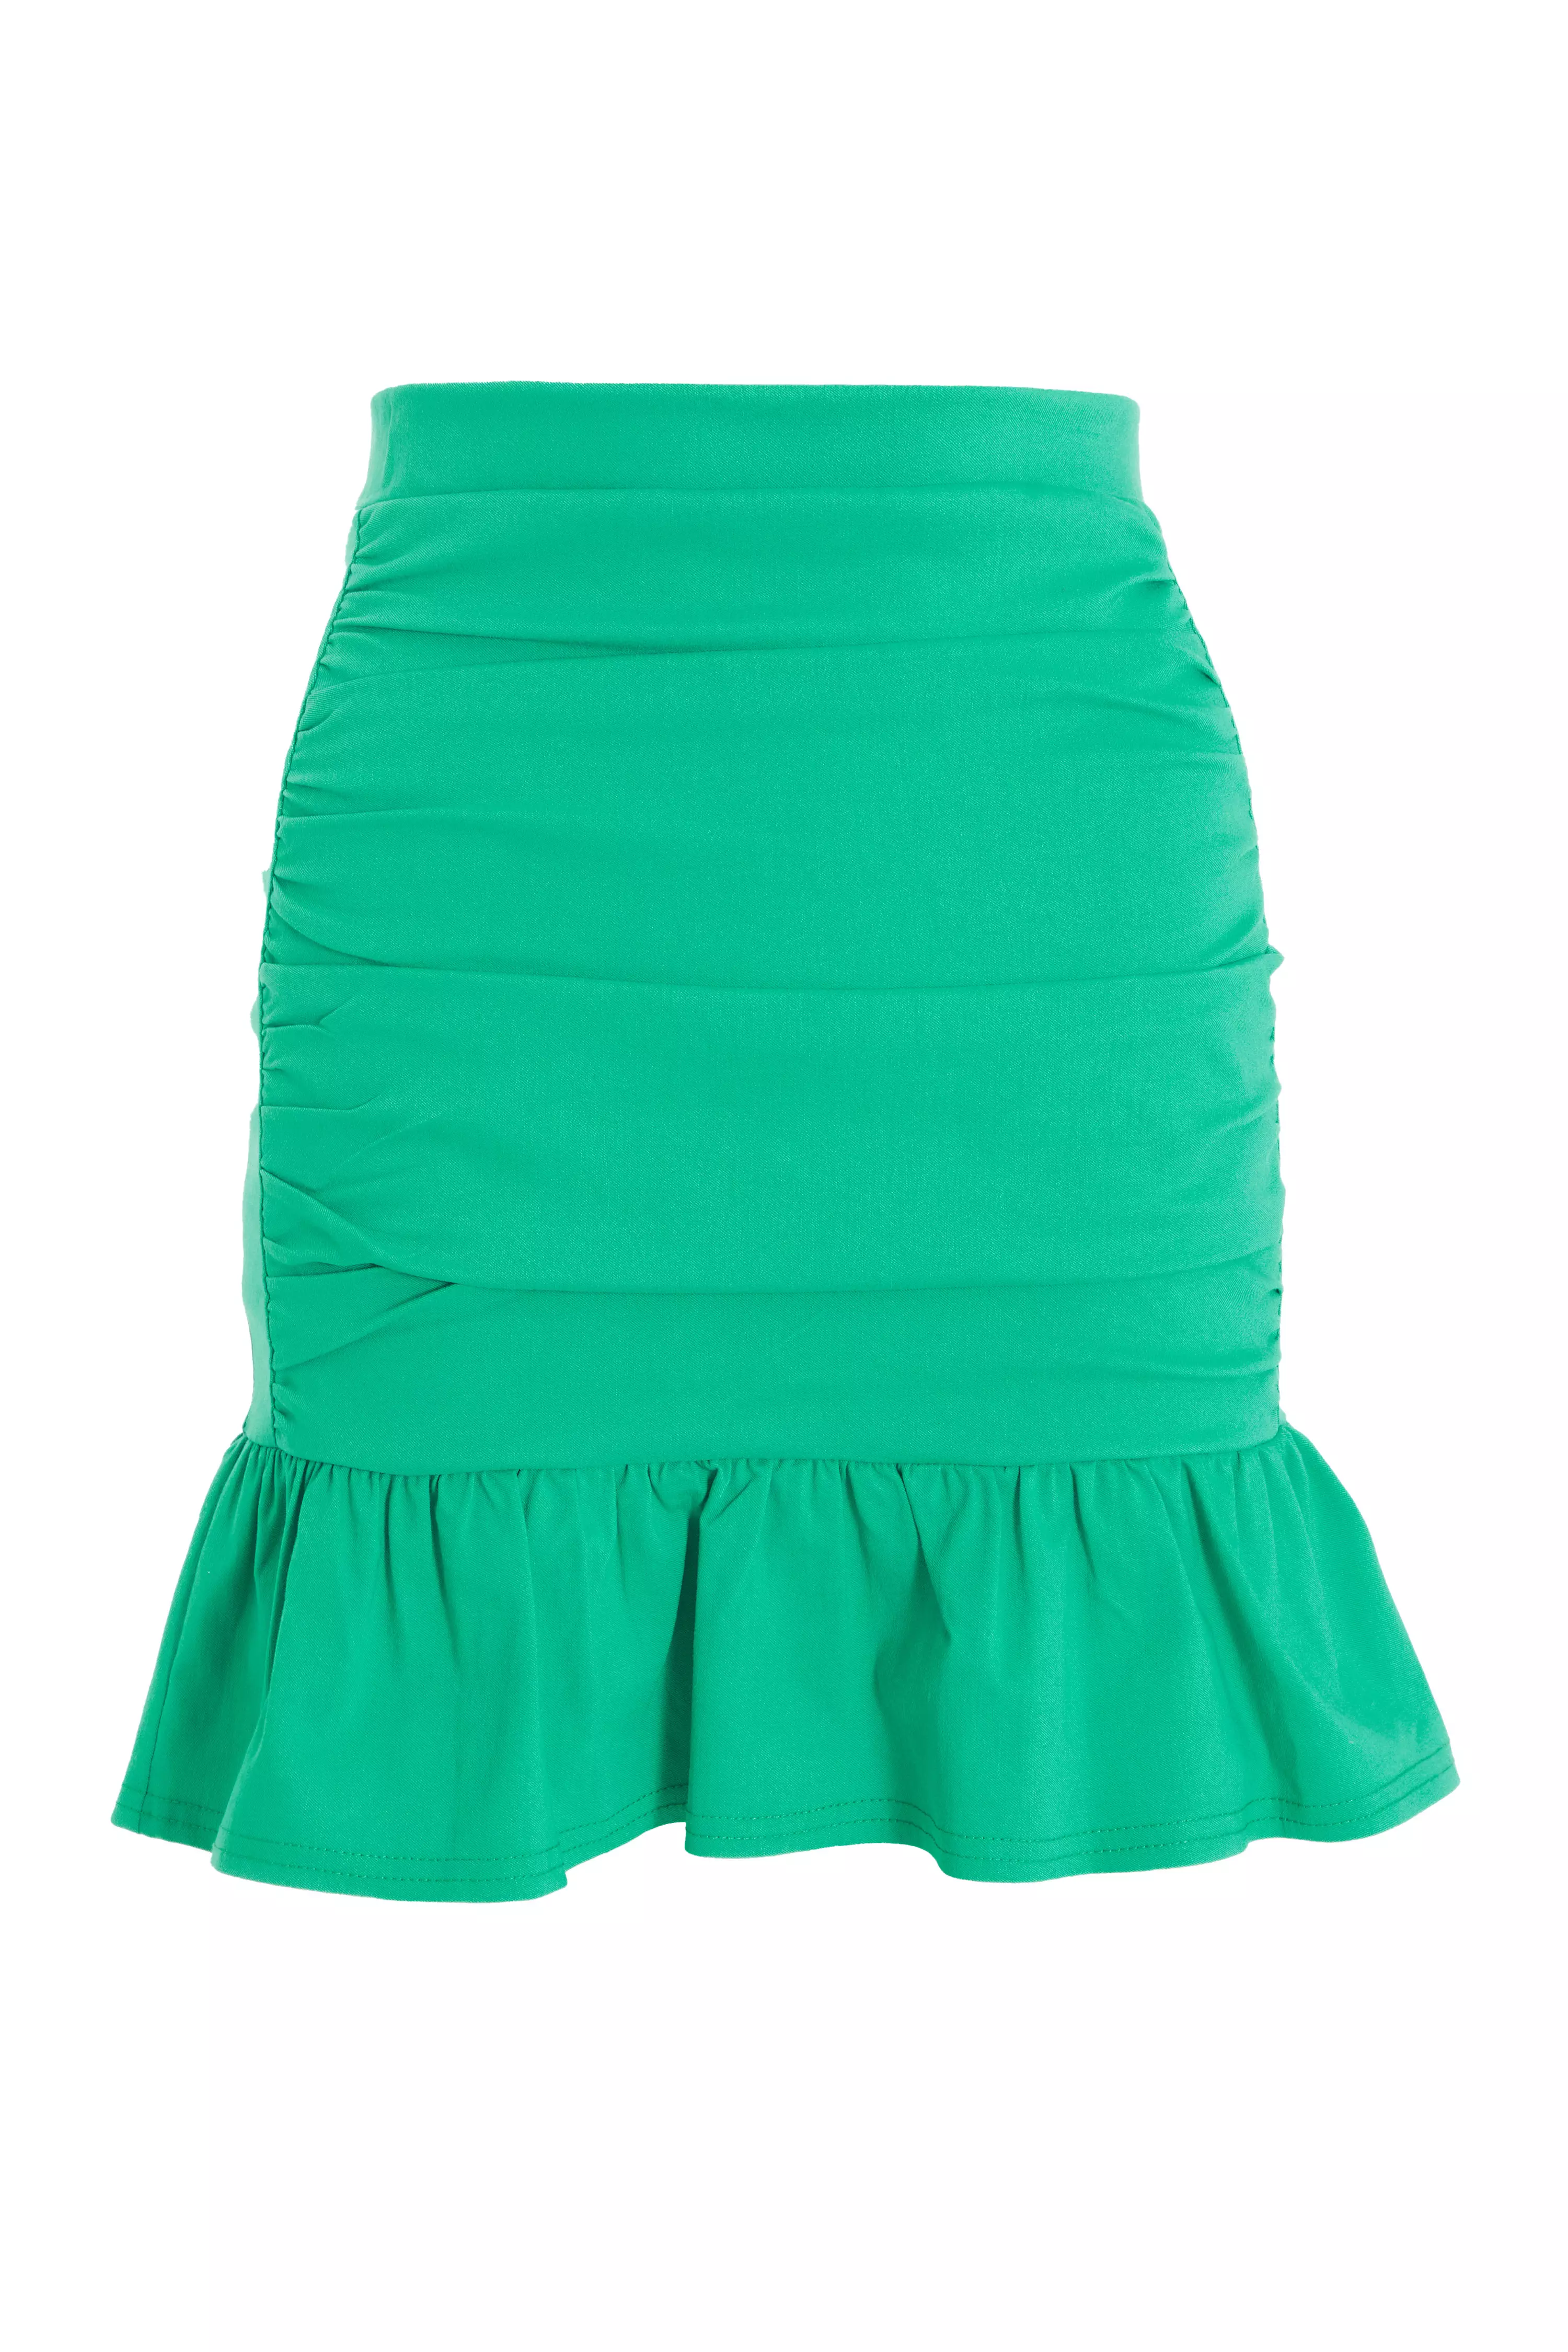 Jade Green Ruched Mini Skirt - QUIZ Clothing